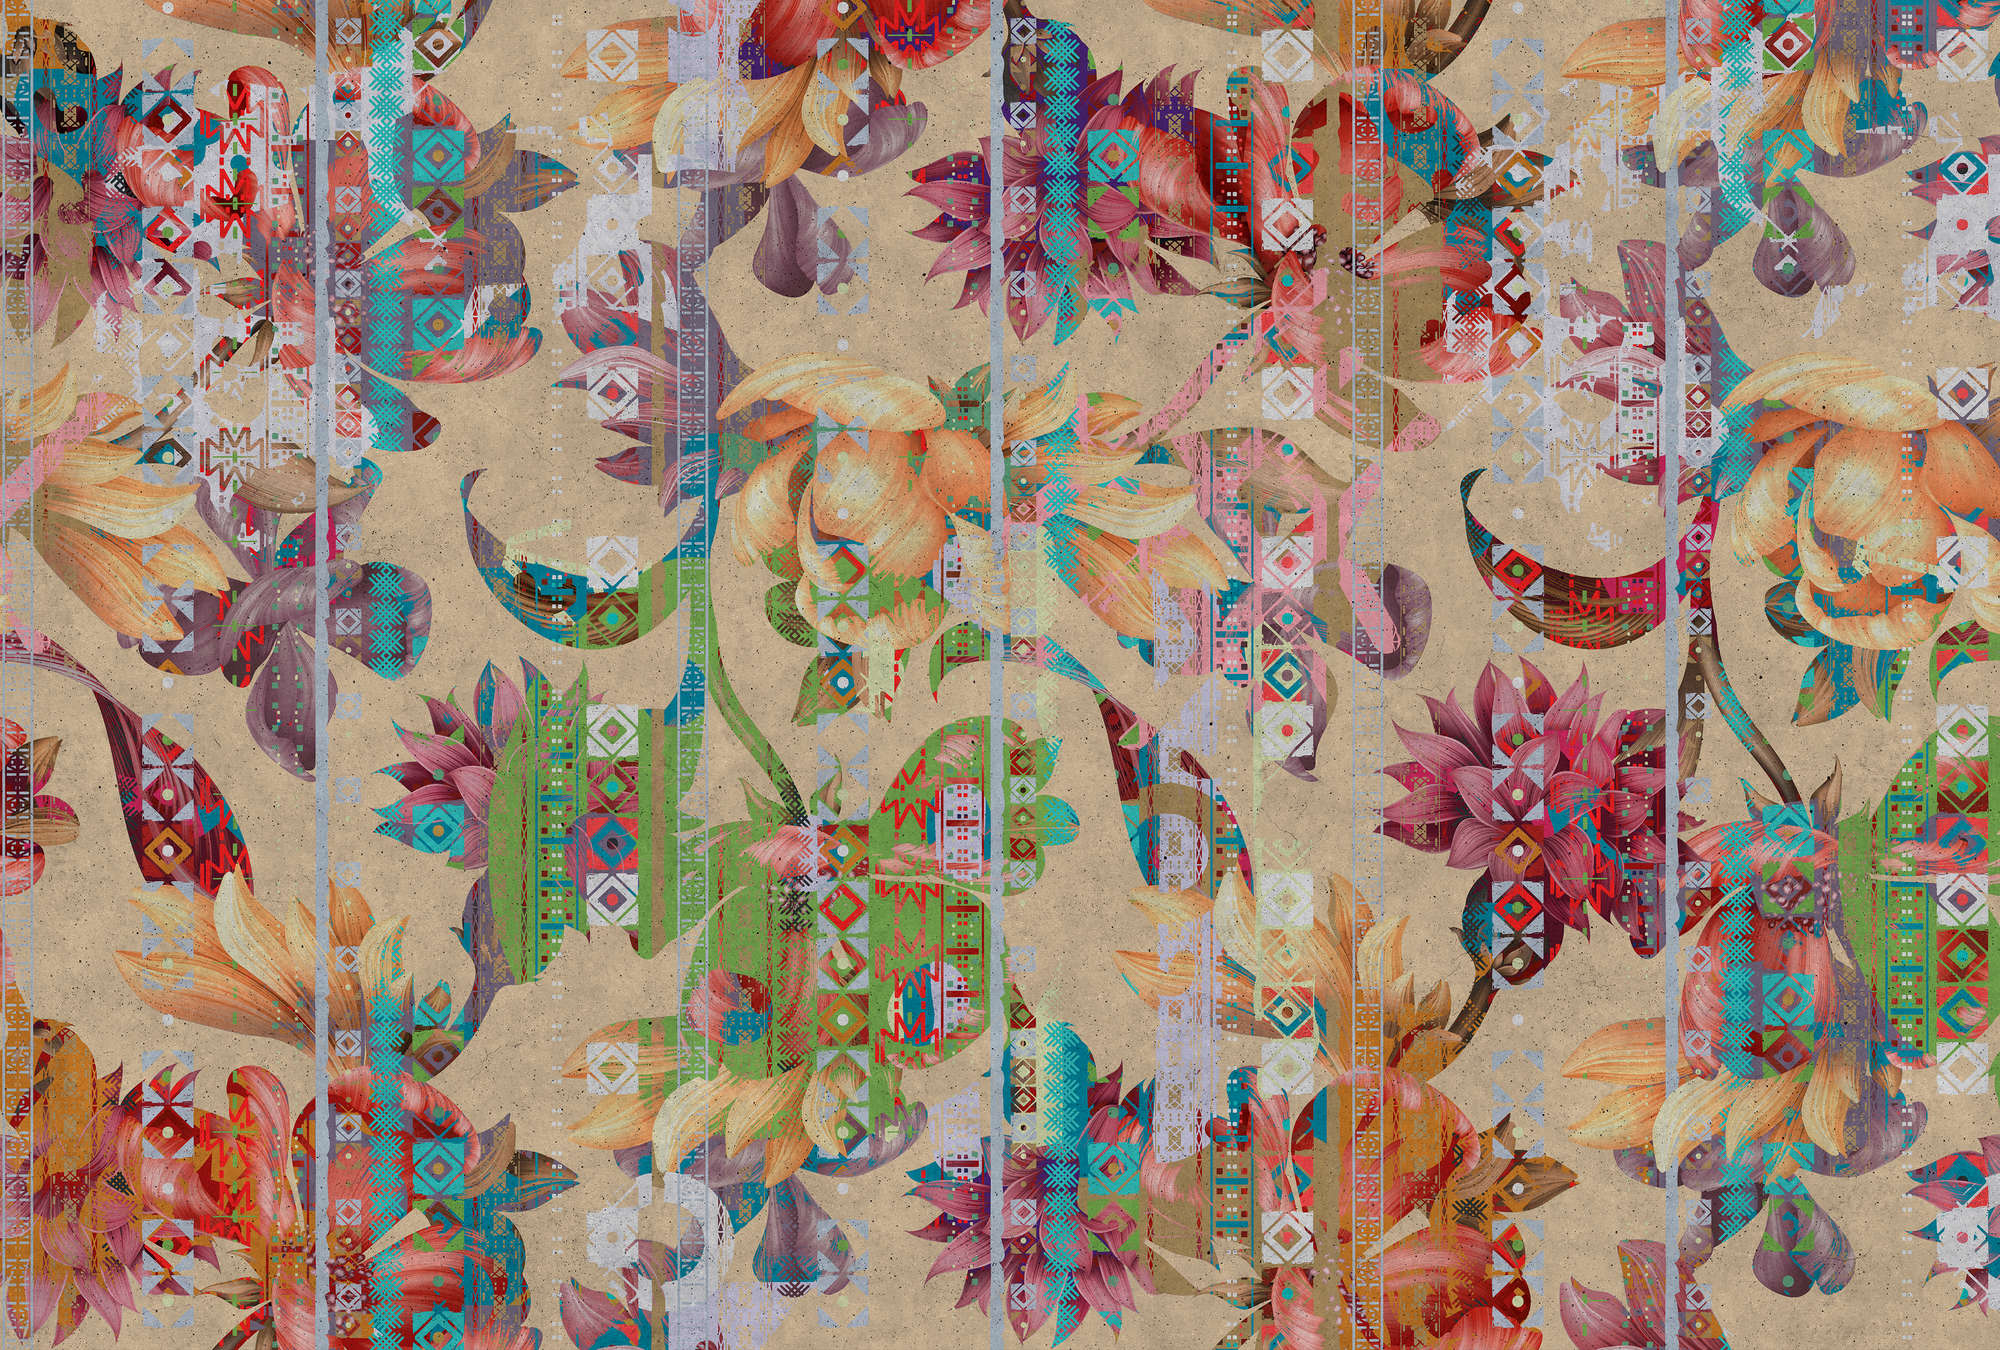             Photo wallpaper birds and plants pattern - cream, green
        